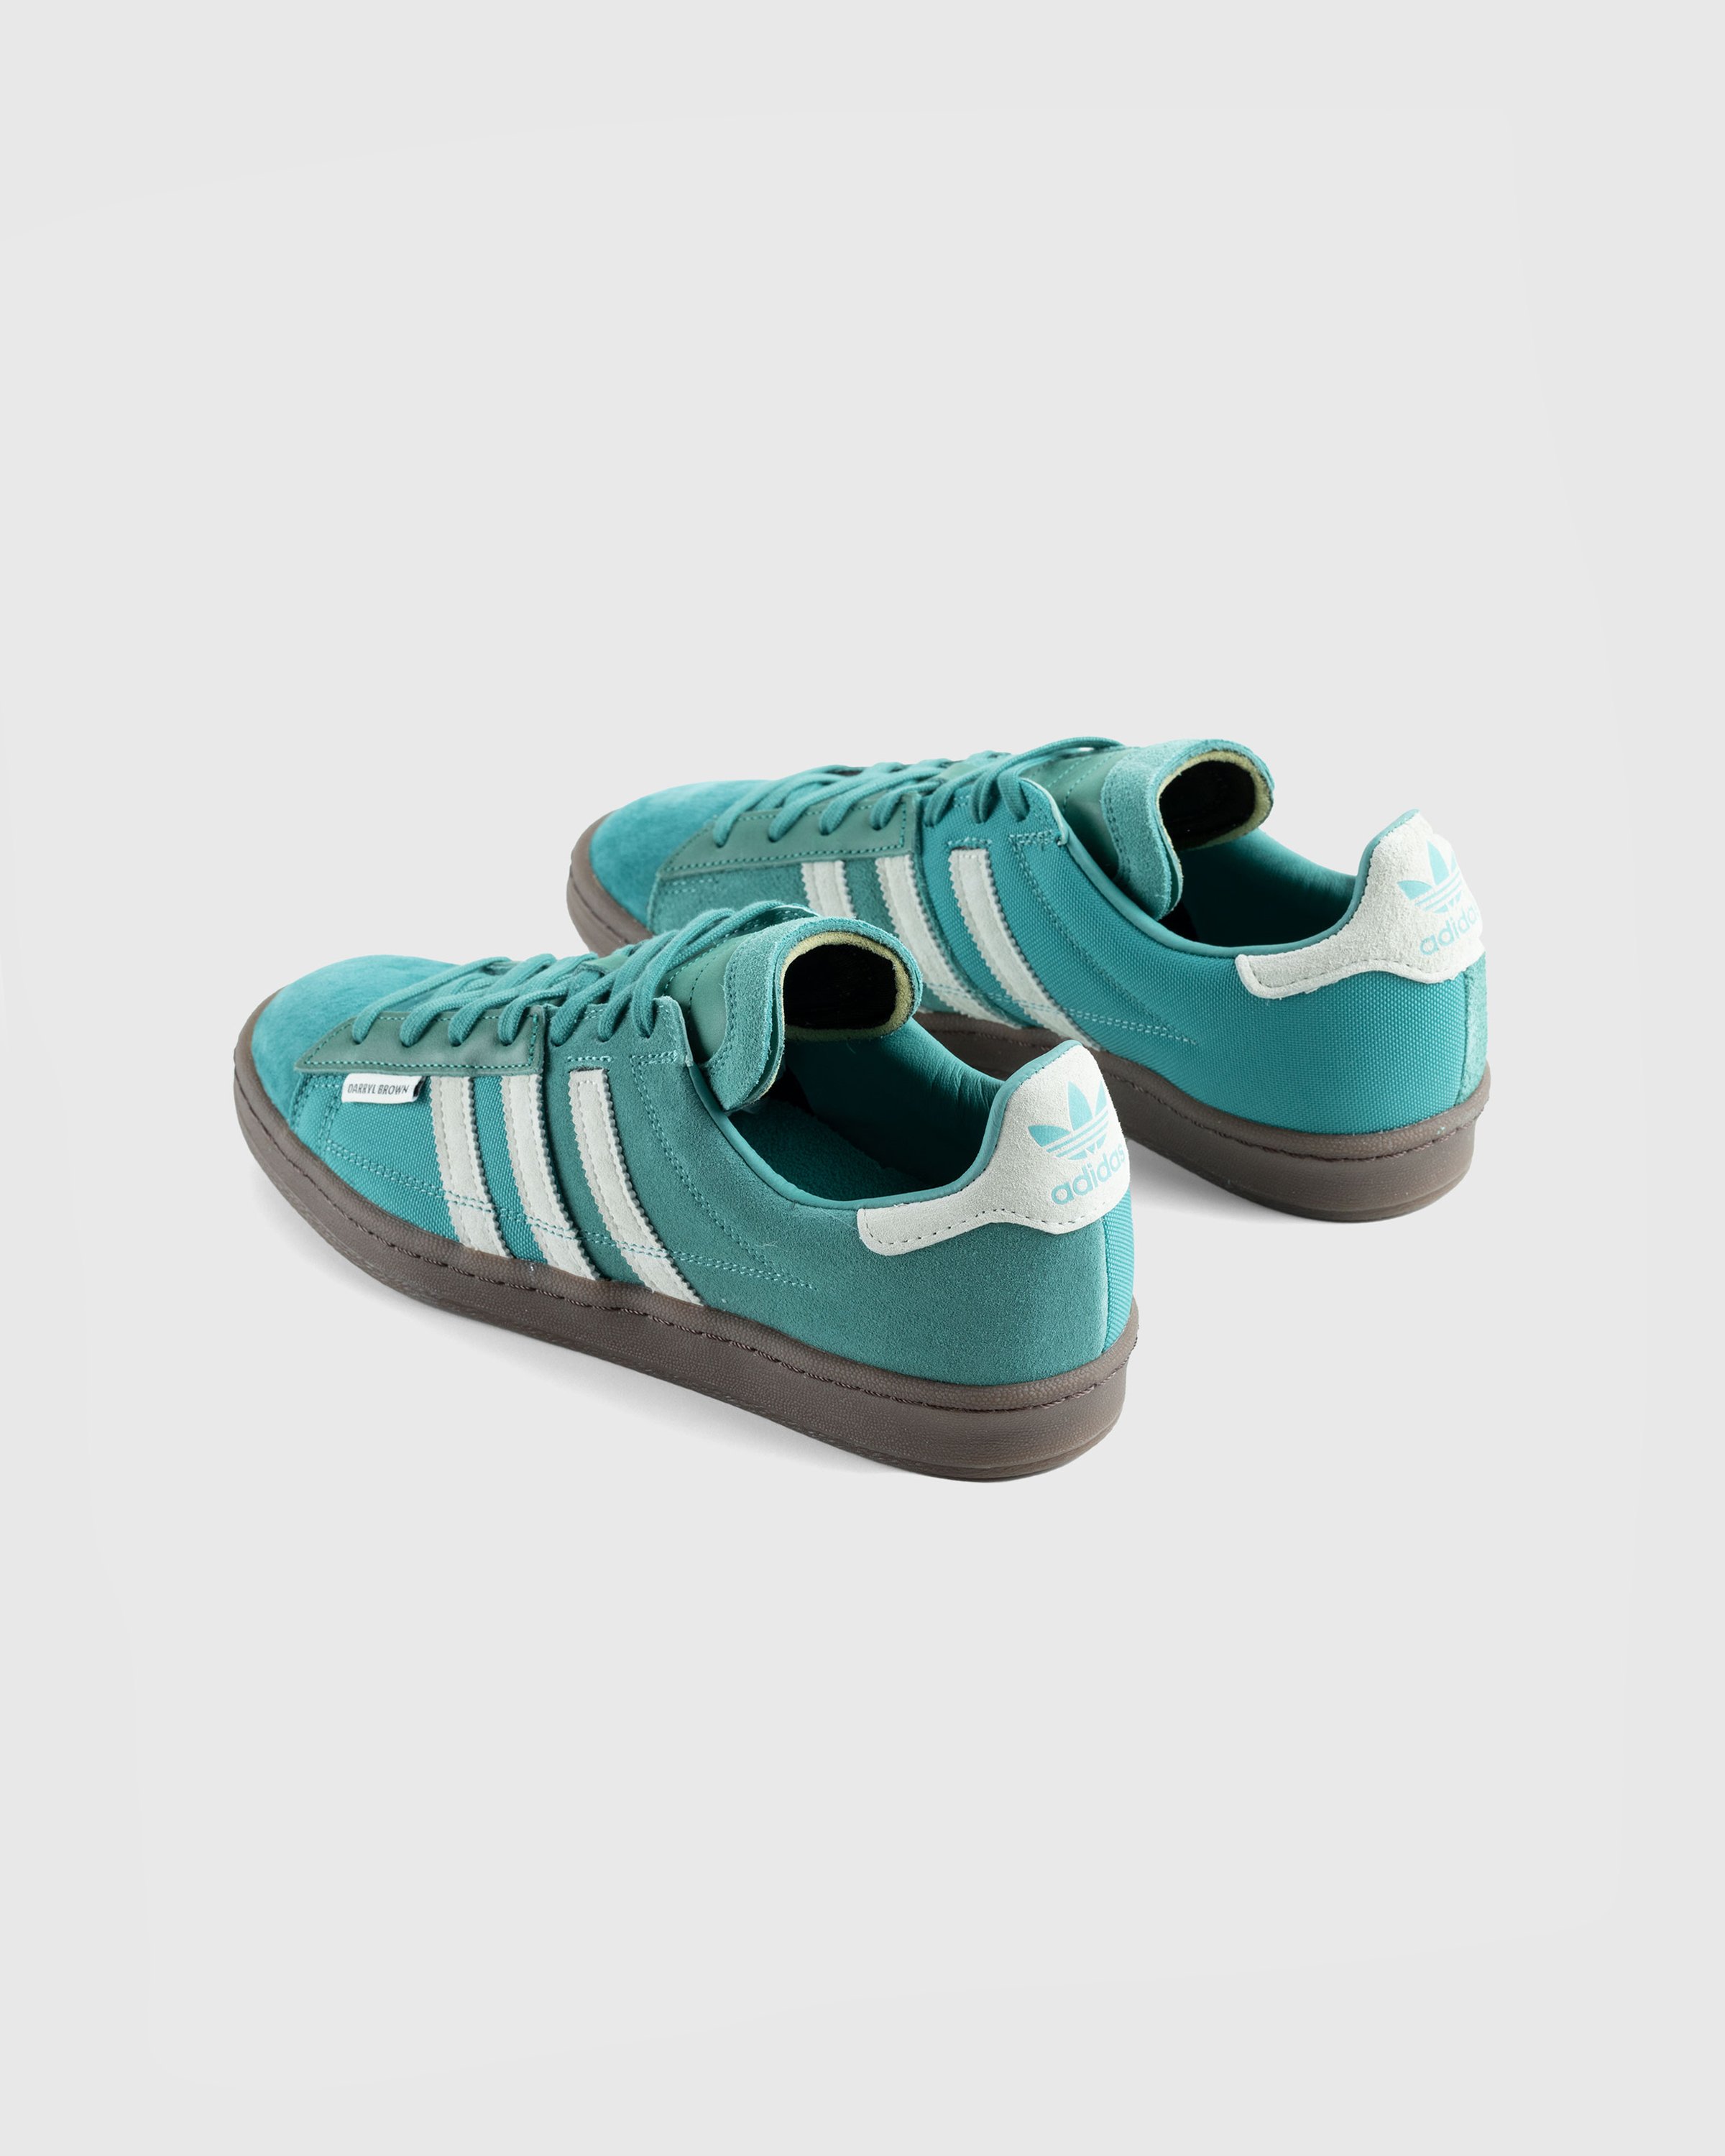 Adidas x Darryl Brown - Campus 80 - Footwear - Green - Image 4